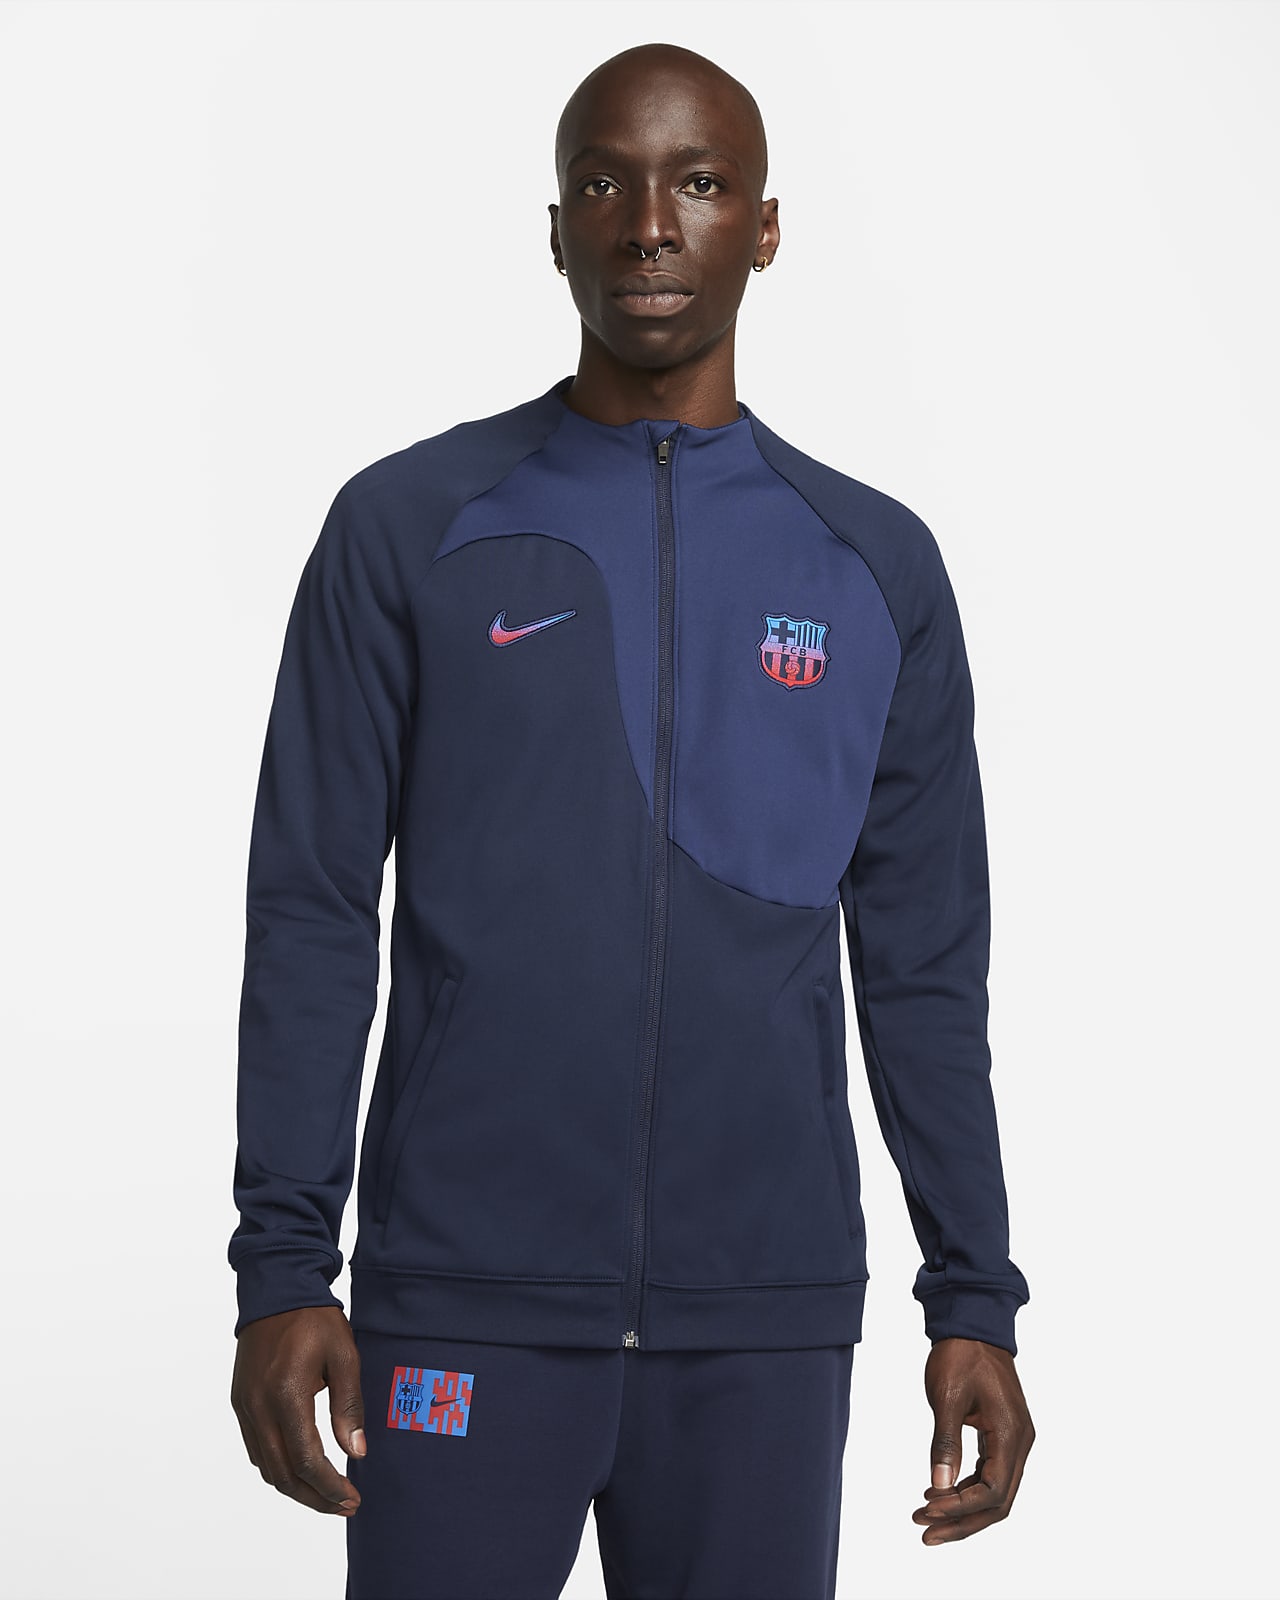 Set out Dated Sportsman FC Barcelona Academy Pro Nike Fußball-Jacke für Herren. Nike AT